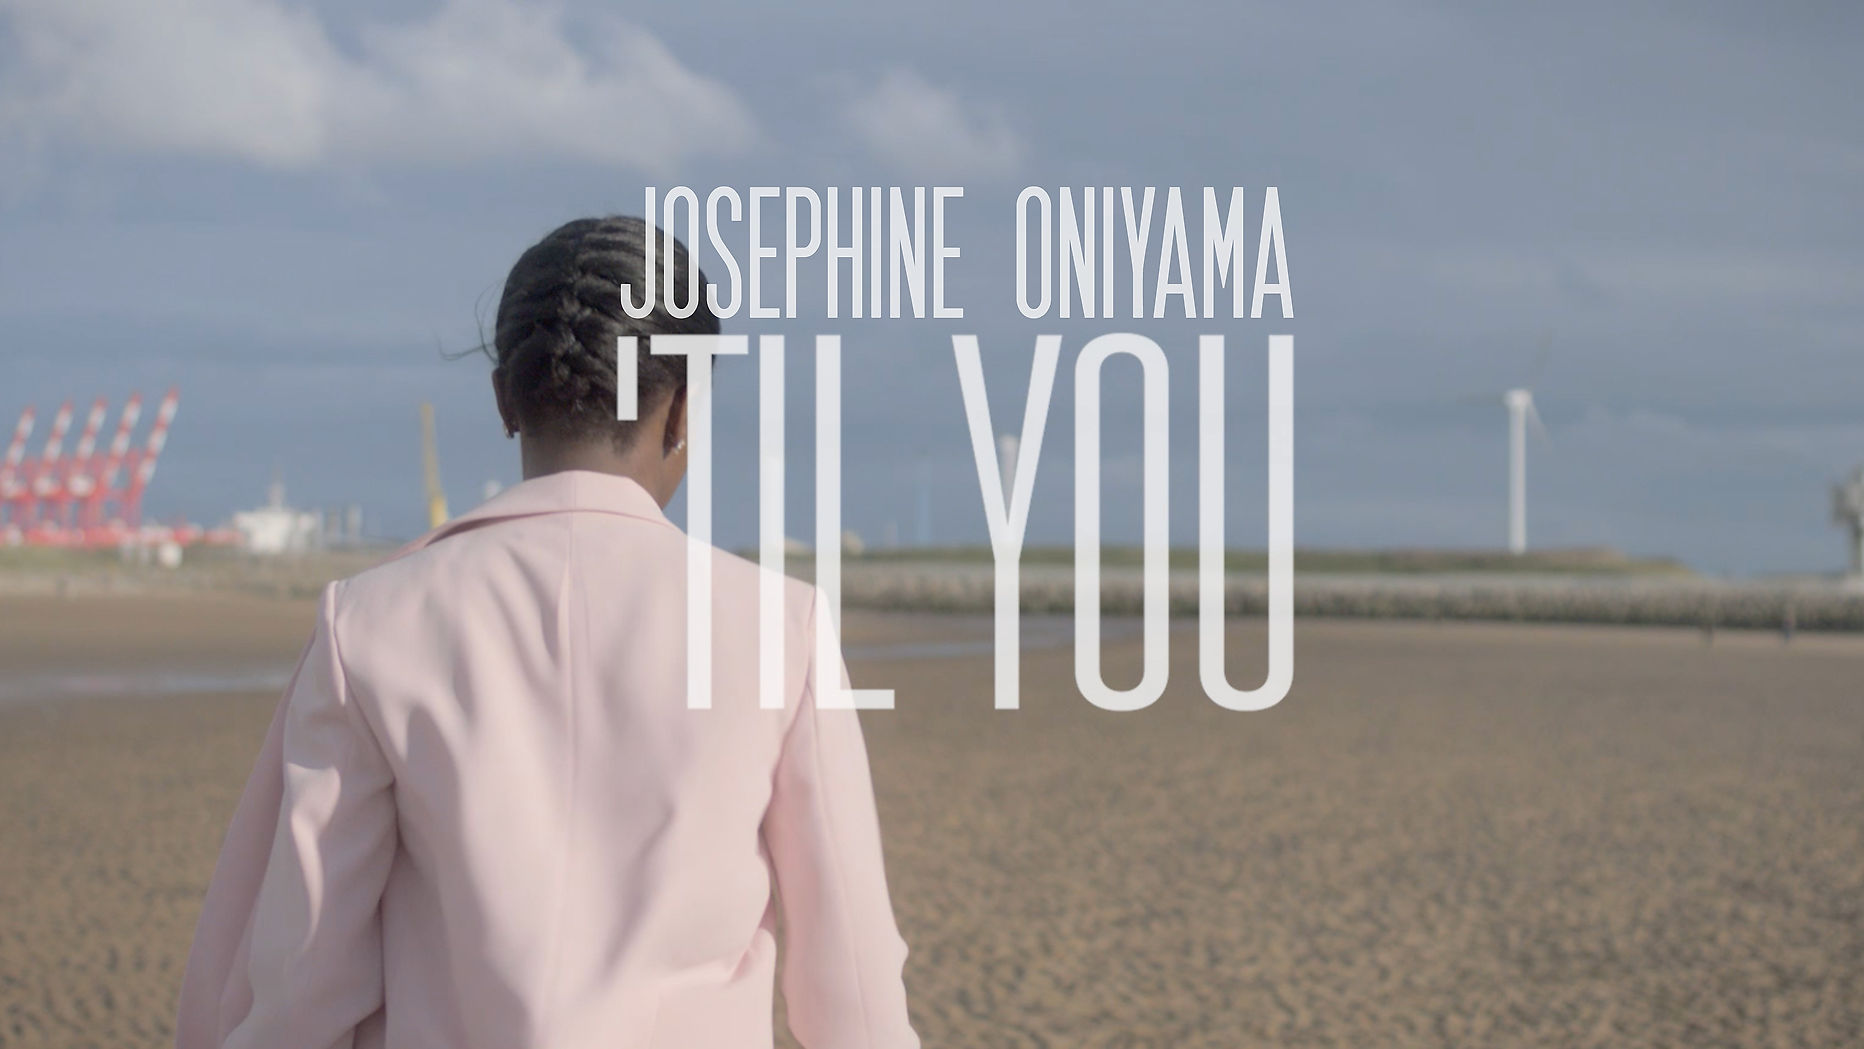 Josephine Oniyama - 'Til You - 2017